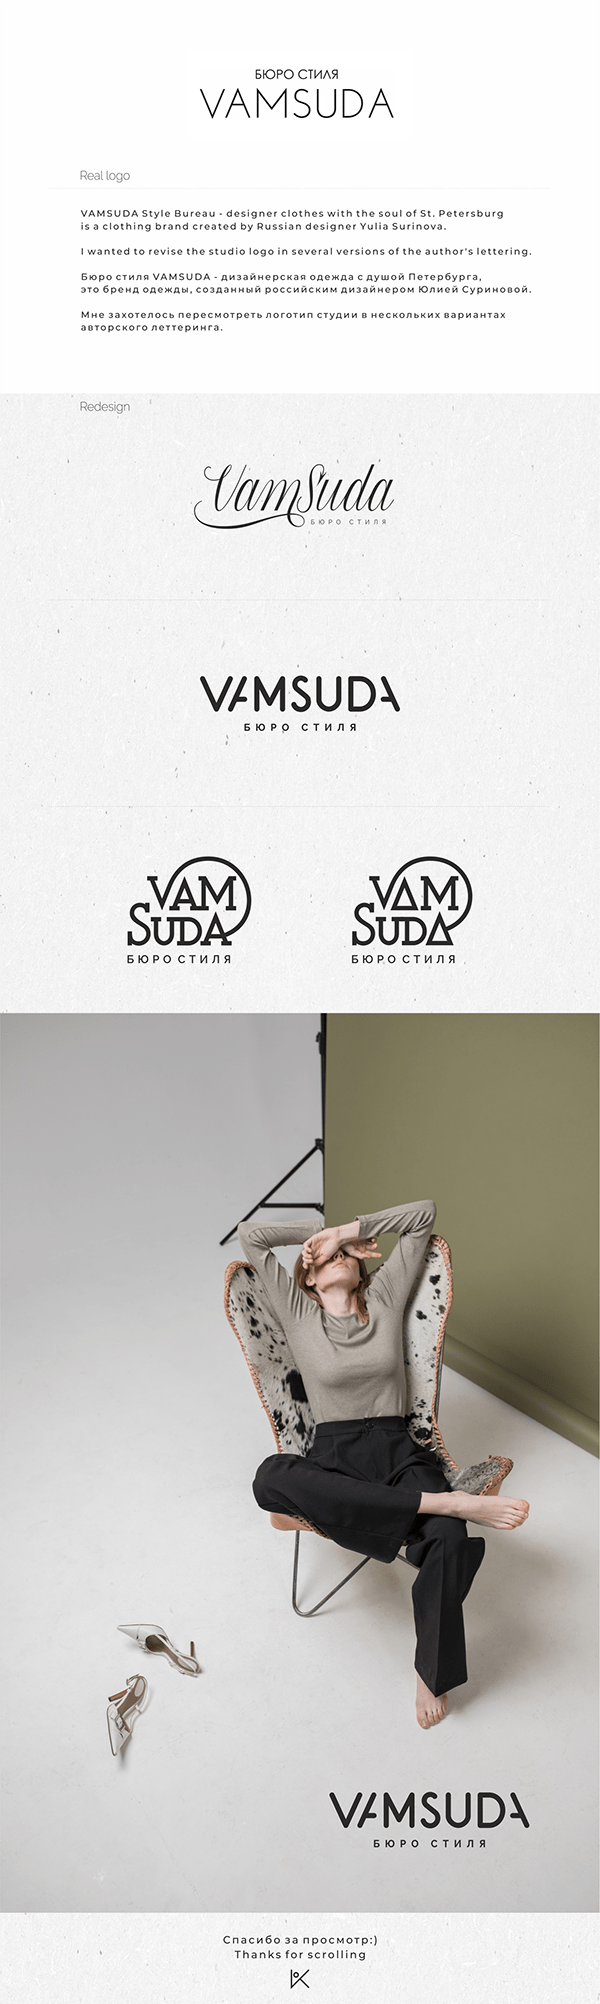 Redesign logo for style bureau VAMSUDA